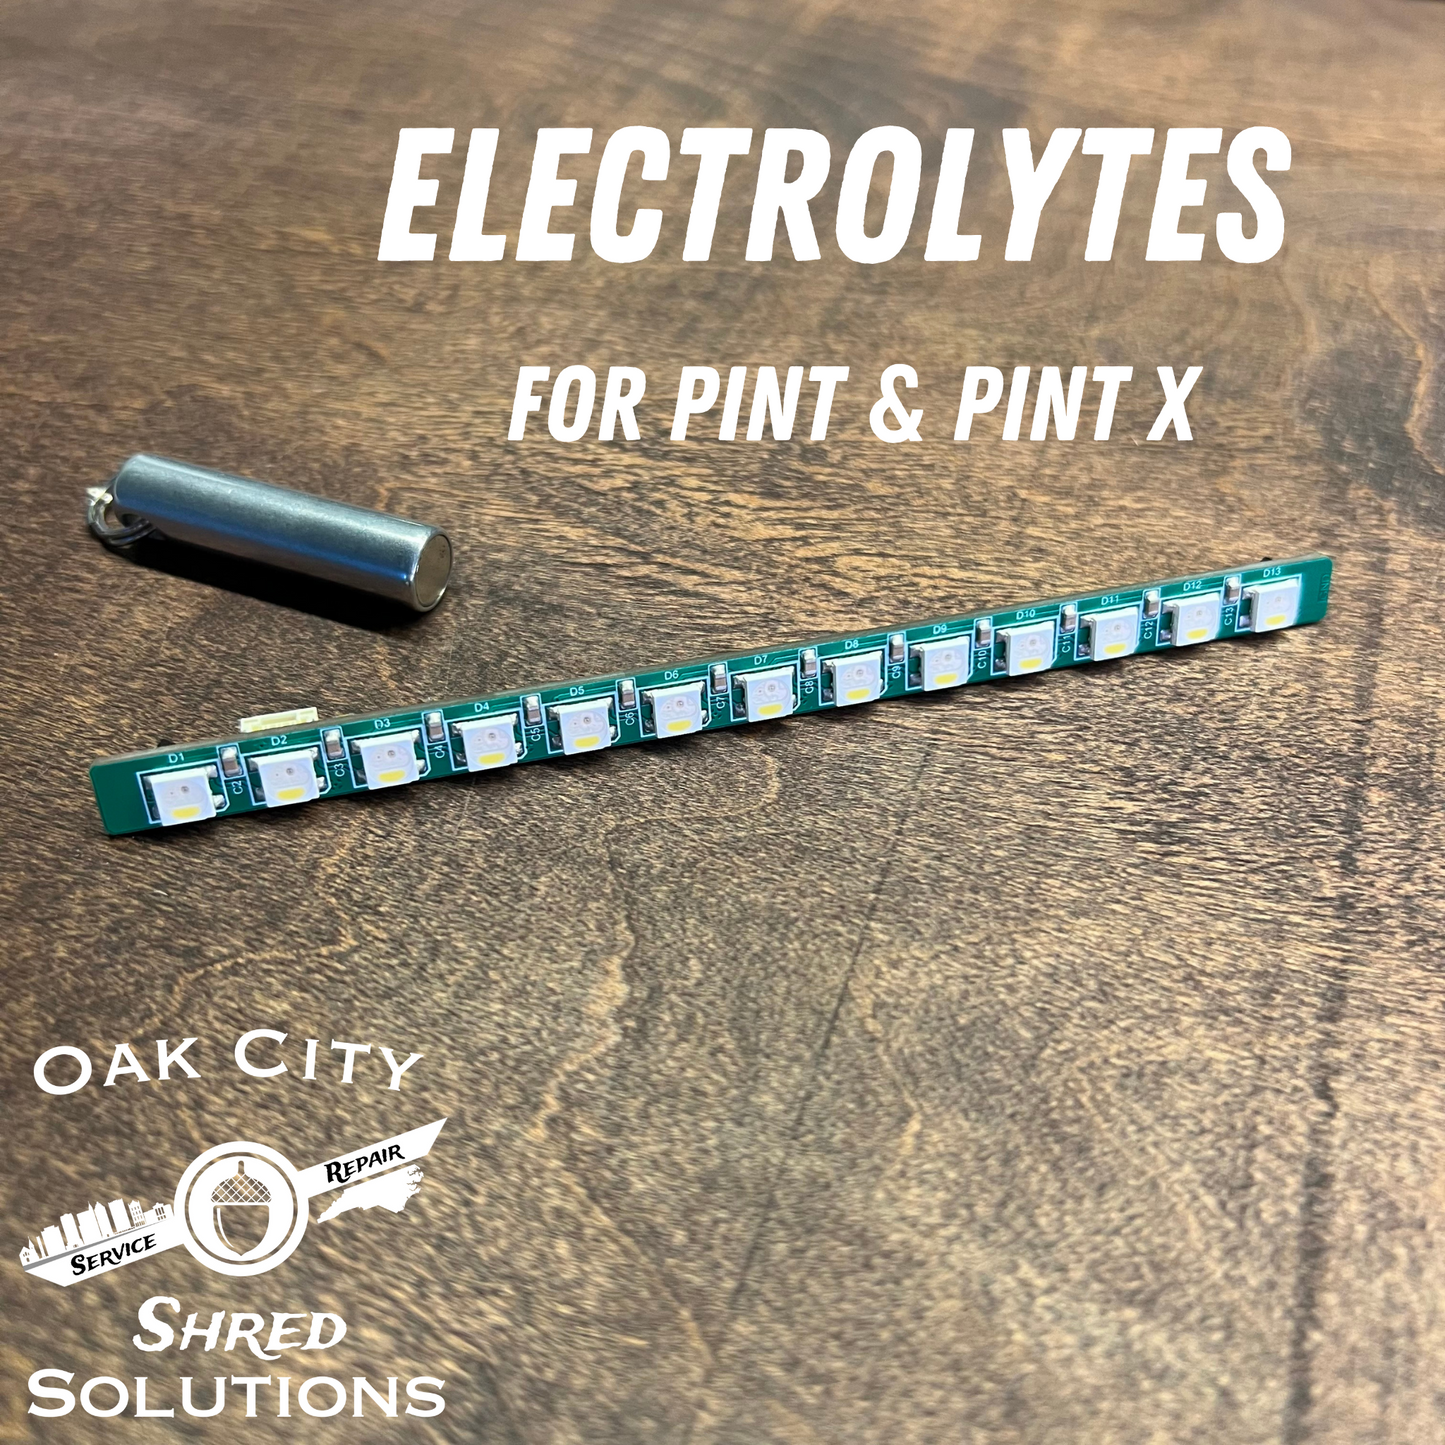 ElectroLytes for Pint & Pint X